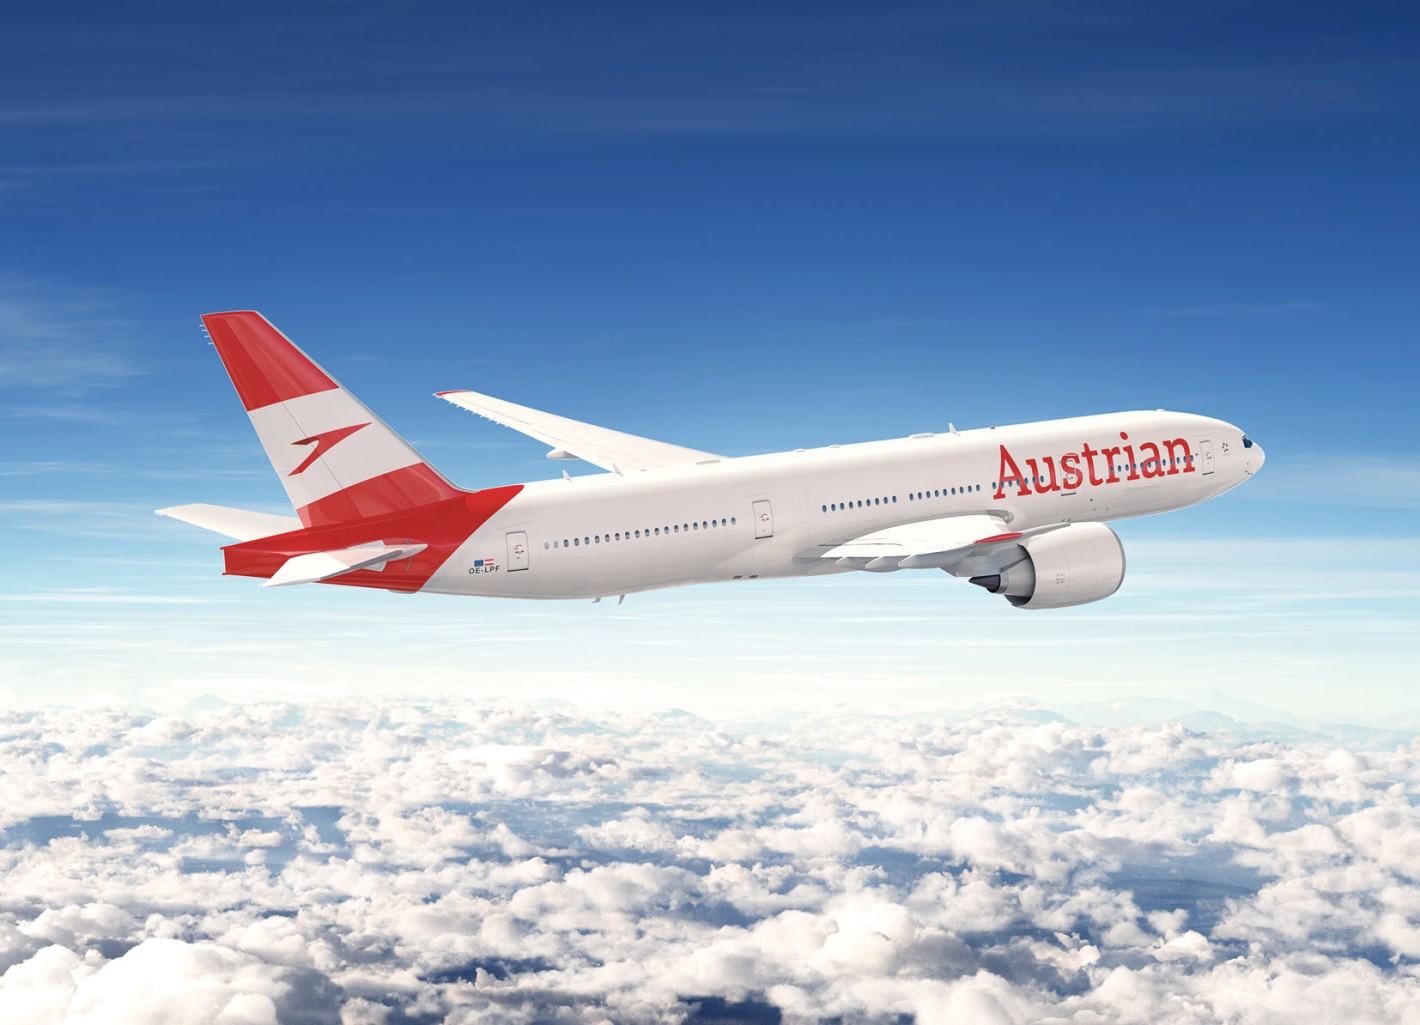 austrian_presspicture_aircraftcaustrian-airlines.jpg